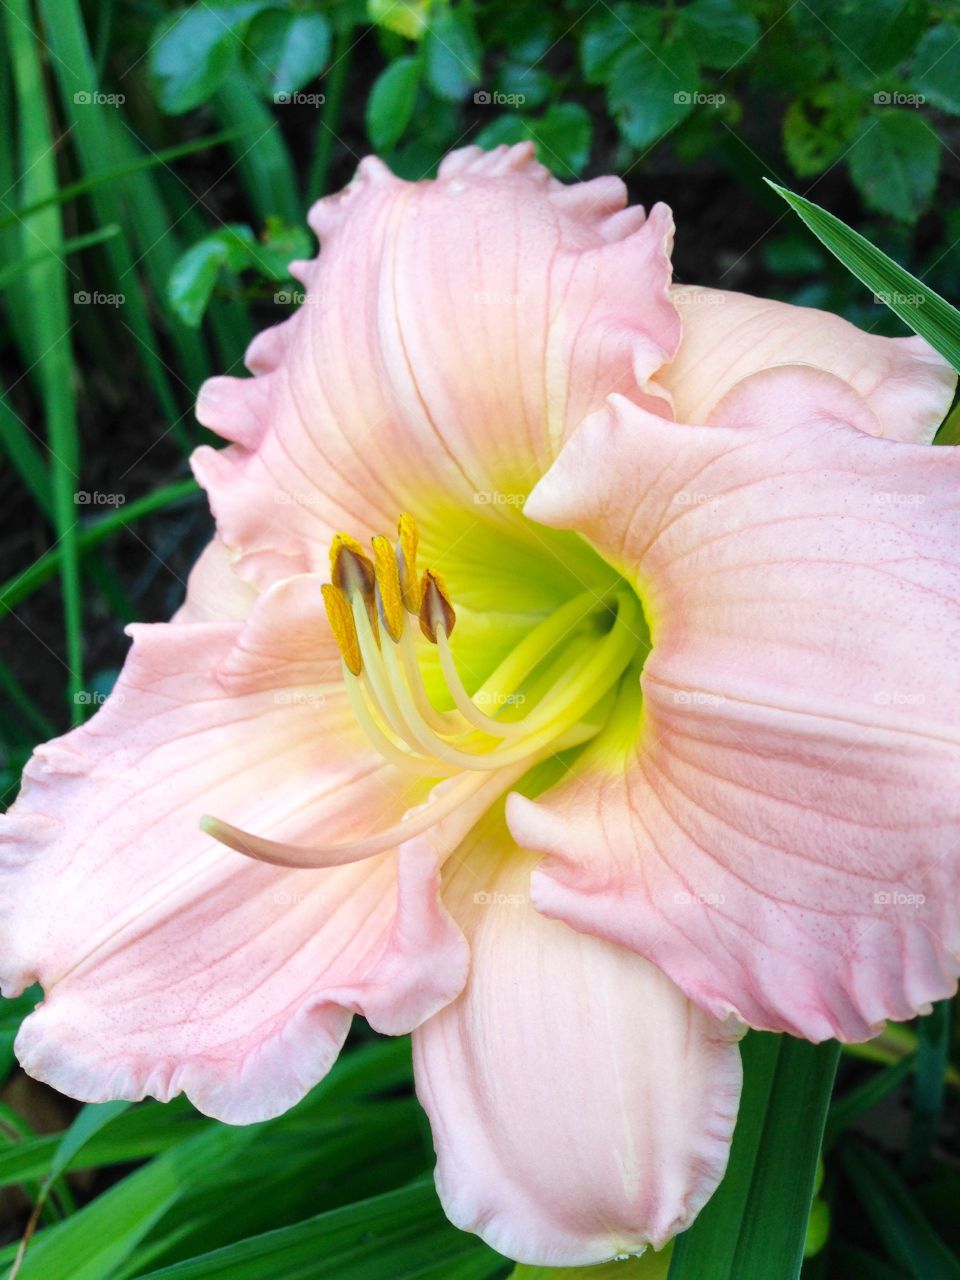 Silken Lily. Lacey, enlightening, surreal beauty. 